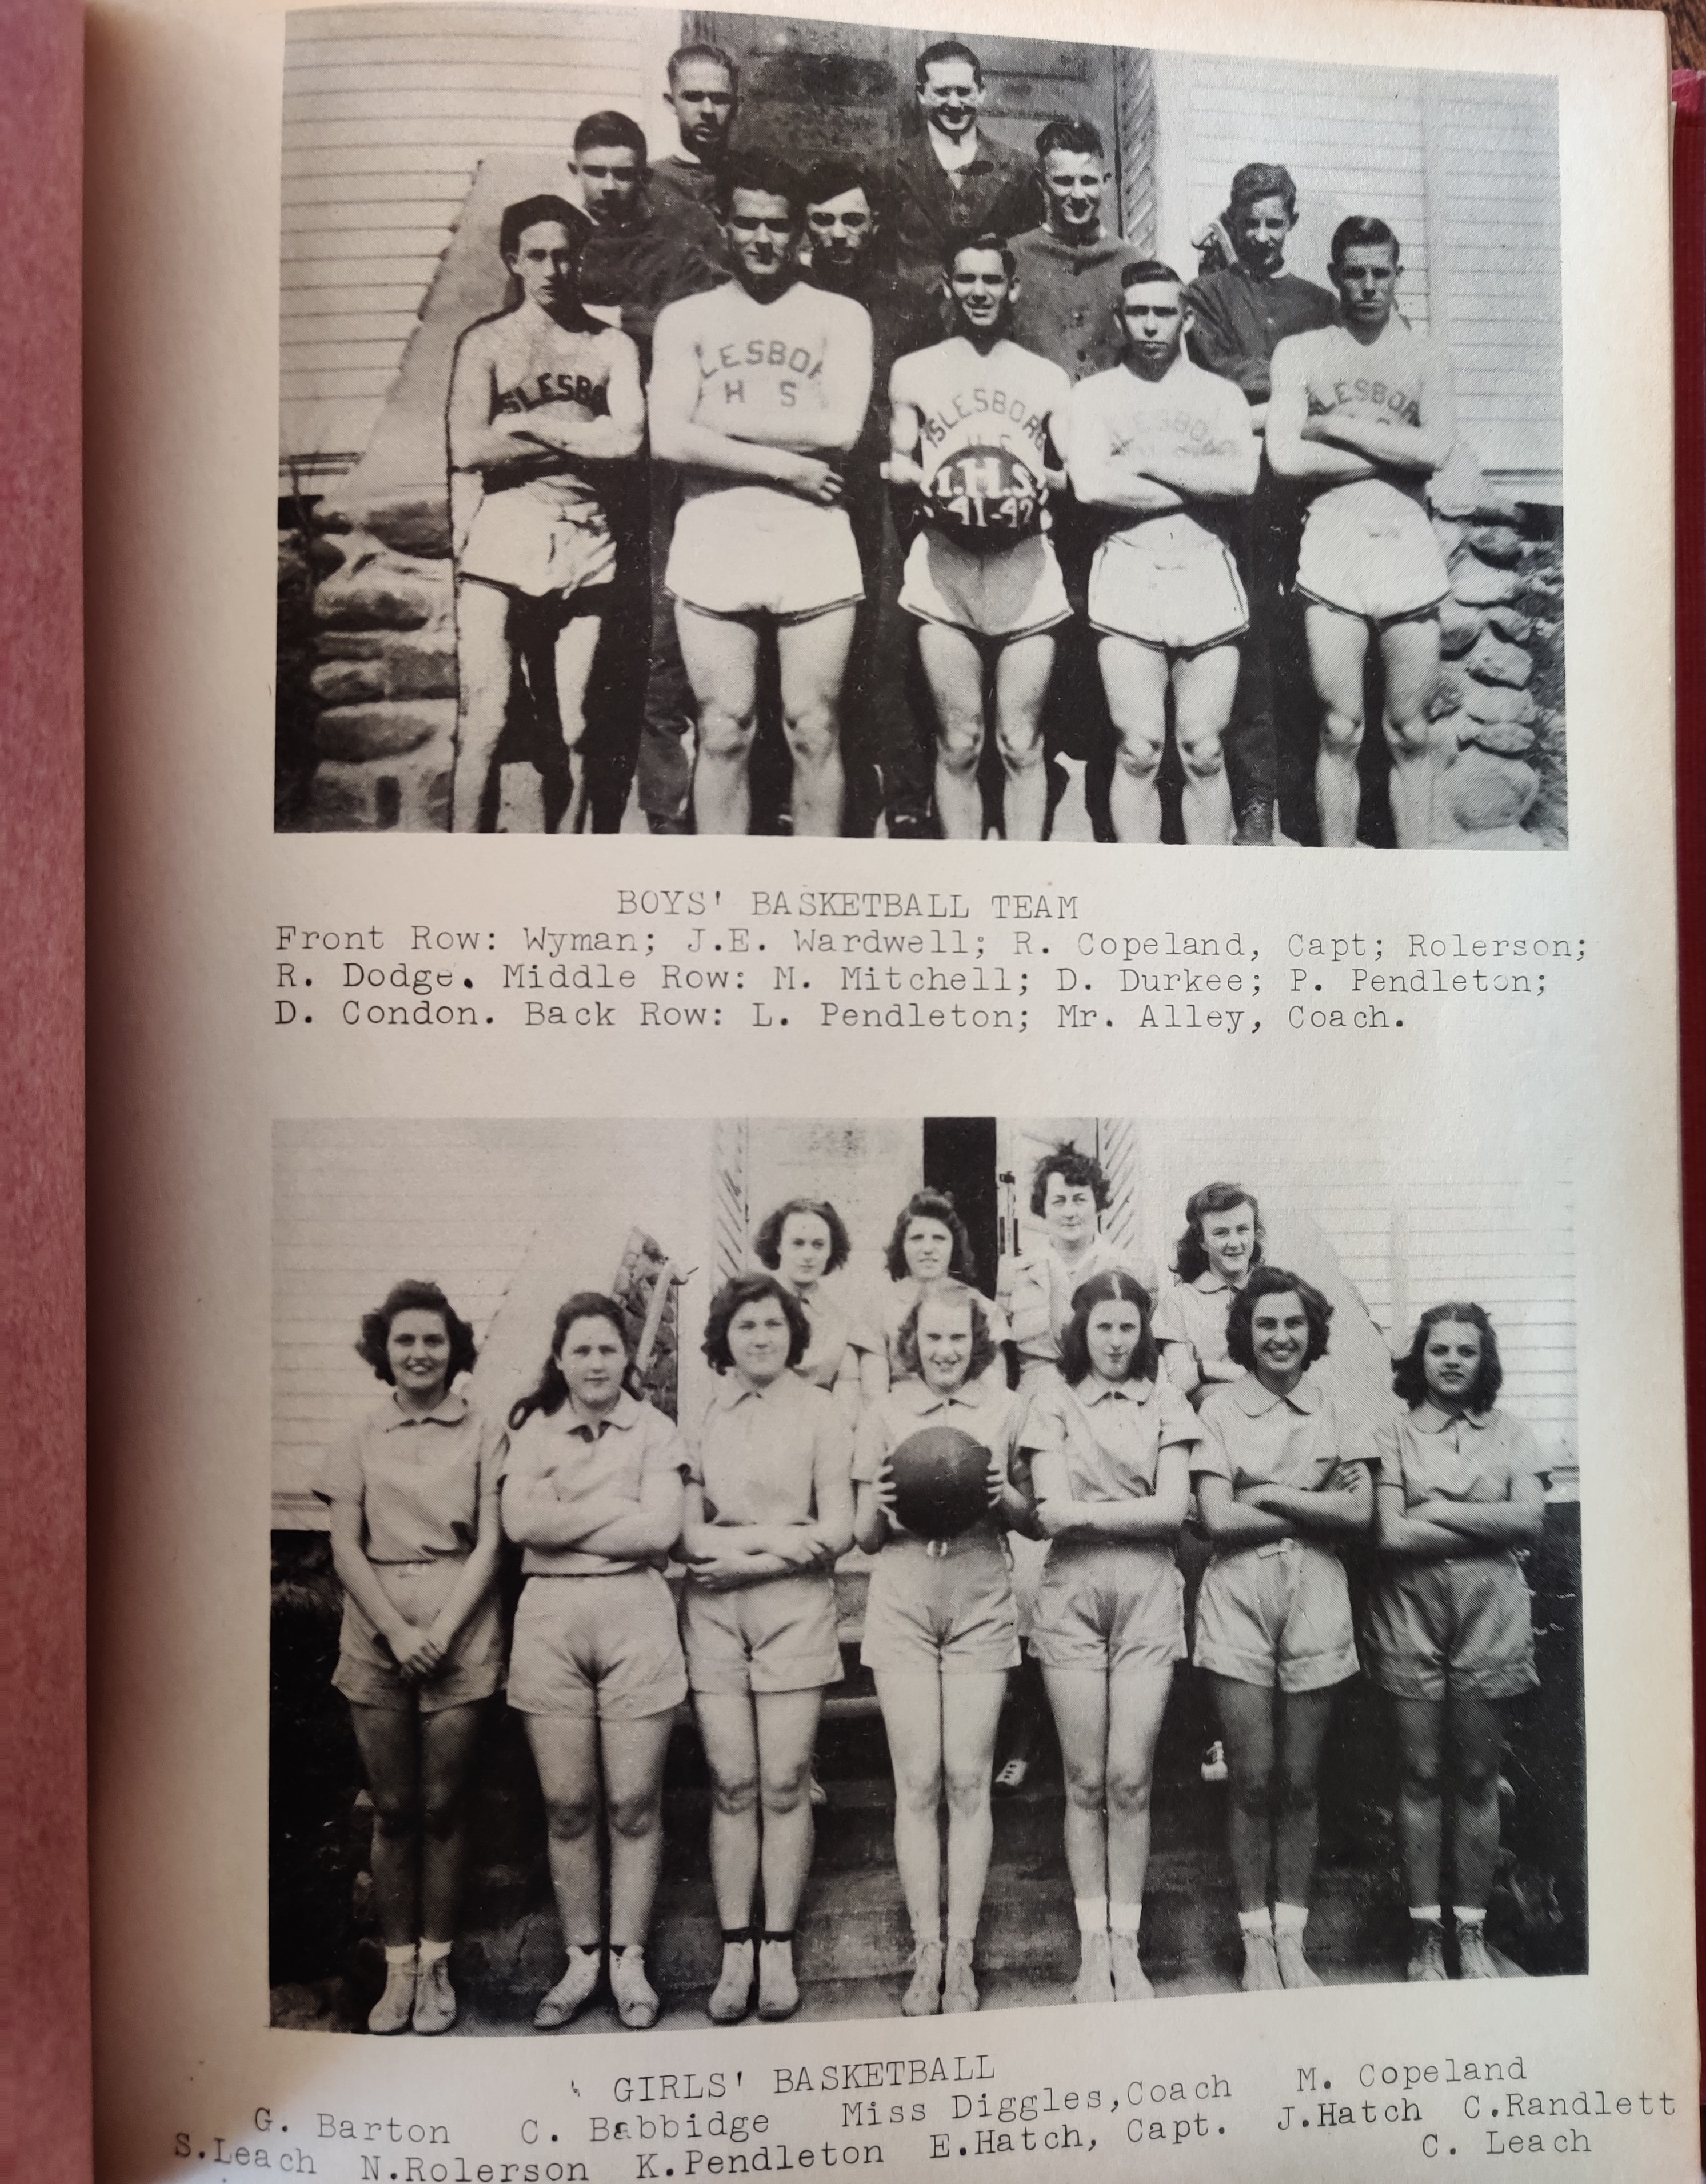 The Islesboro school basketball team in the 1941-1942 school year.